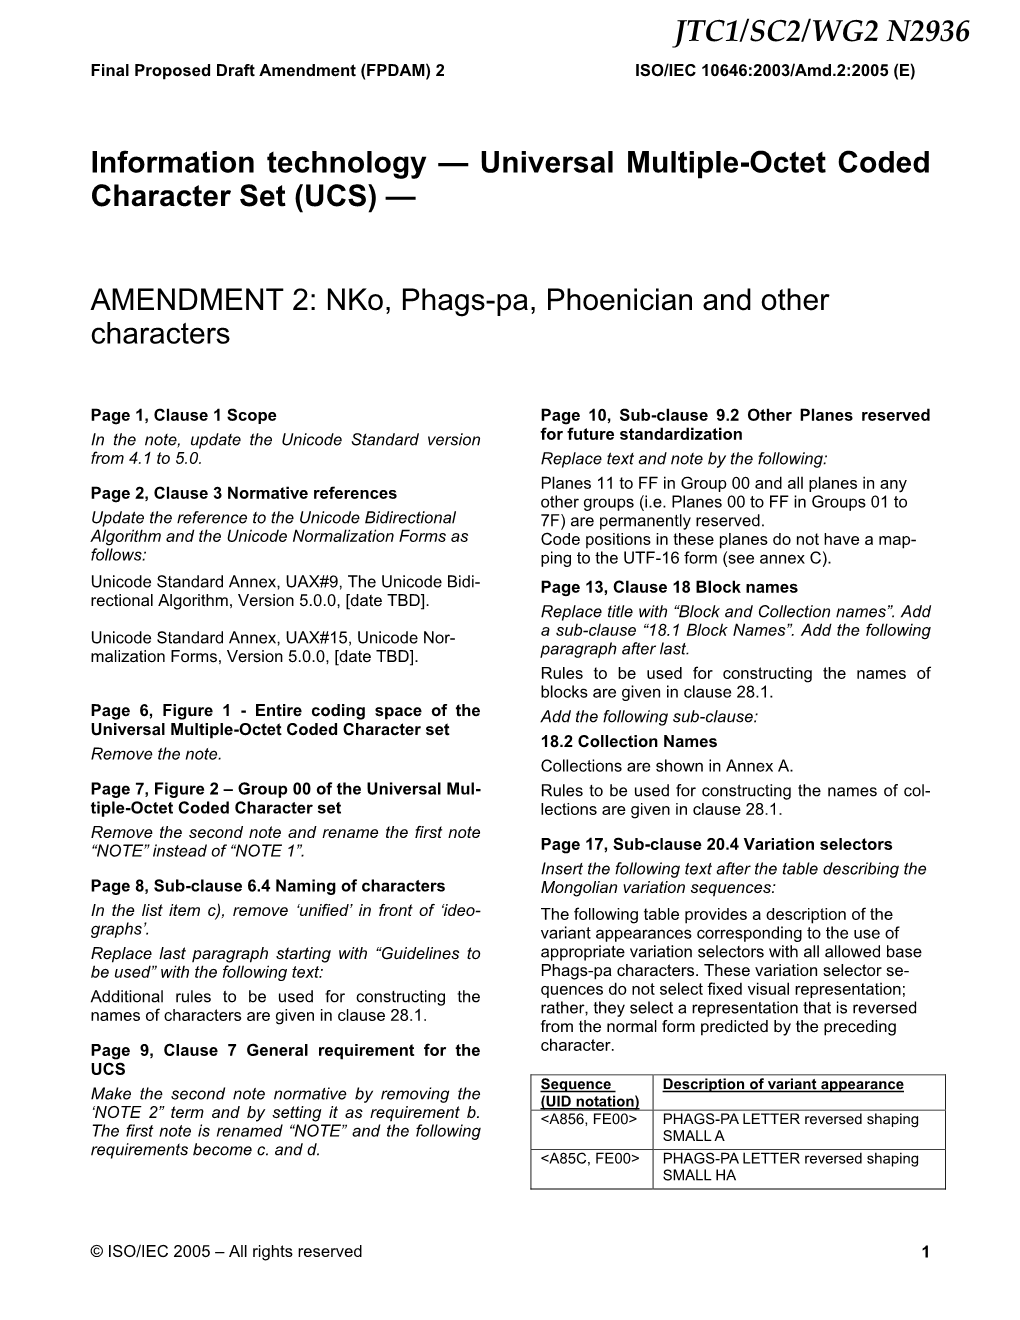 Universal Multiple-Octet Coded Character Set (UCS) -- AMENDMENT